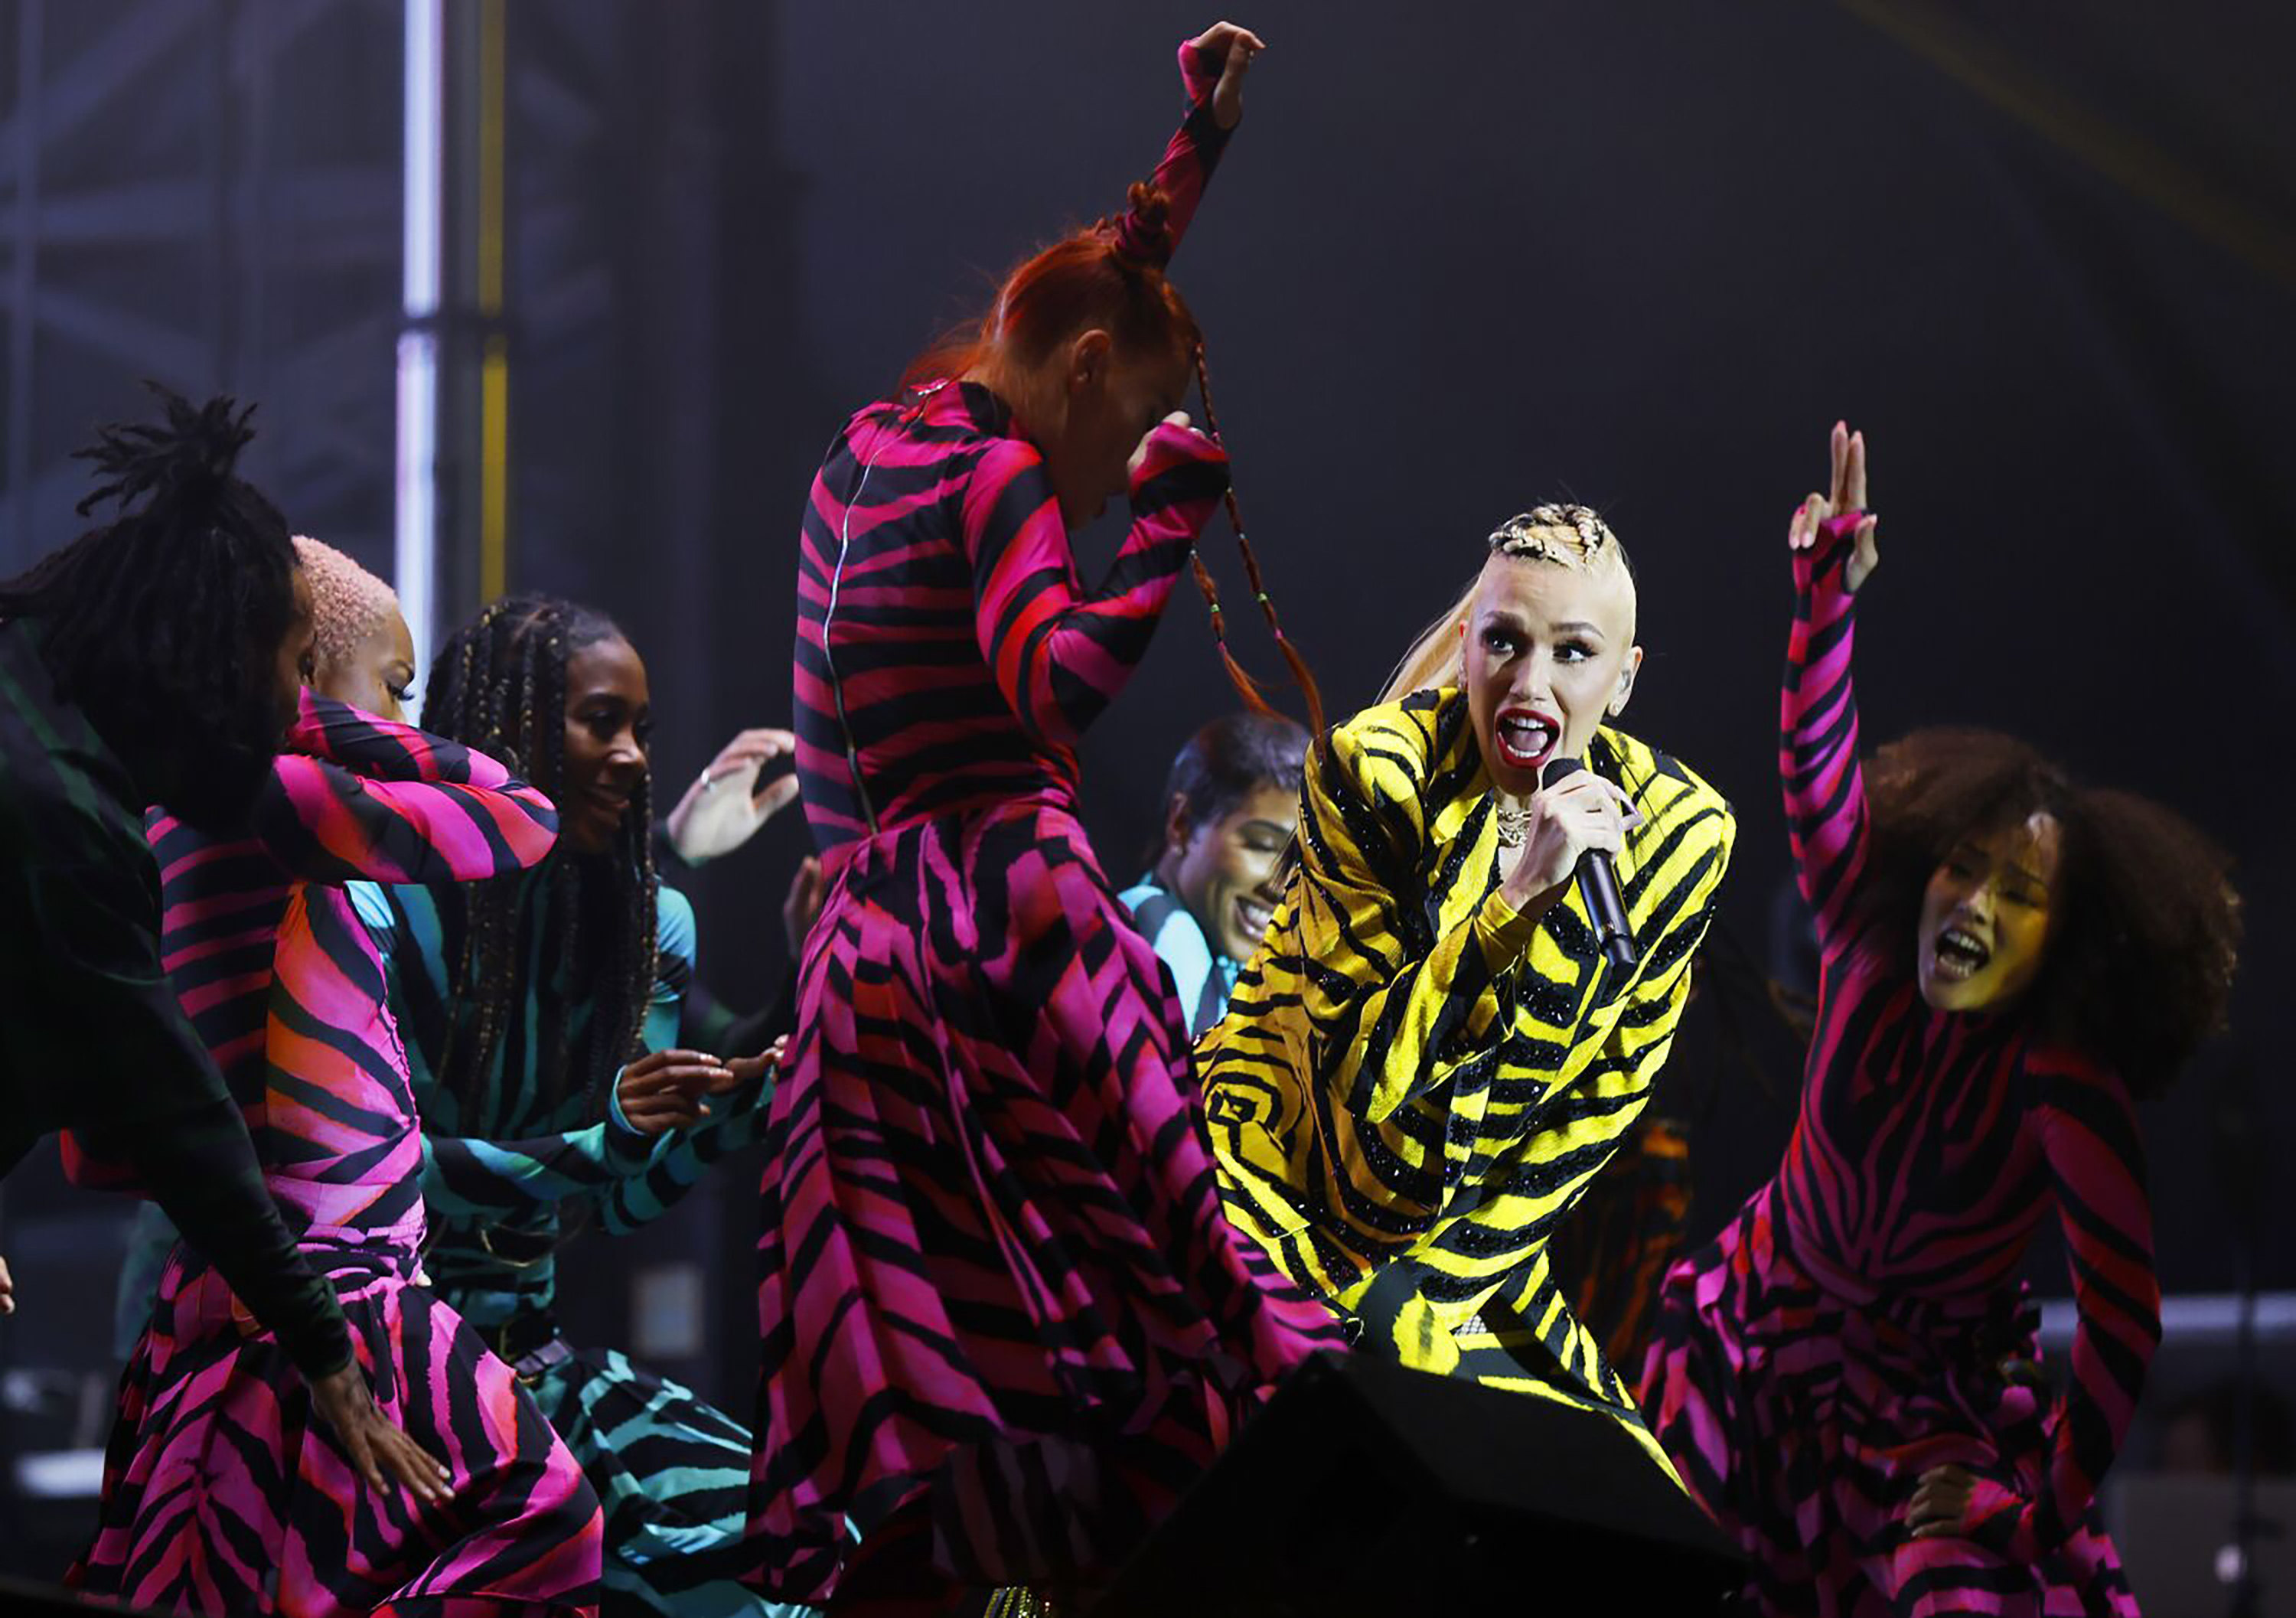 US singer Gwen Stefani performs at a festival in San Diego in November. Photo: The San Diego Union-Tribune via TNS